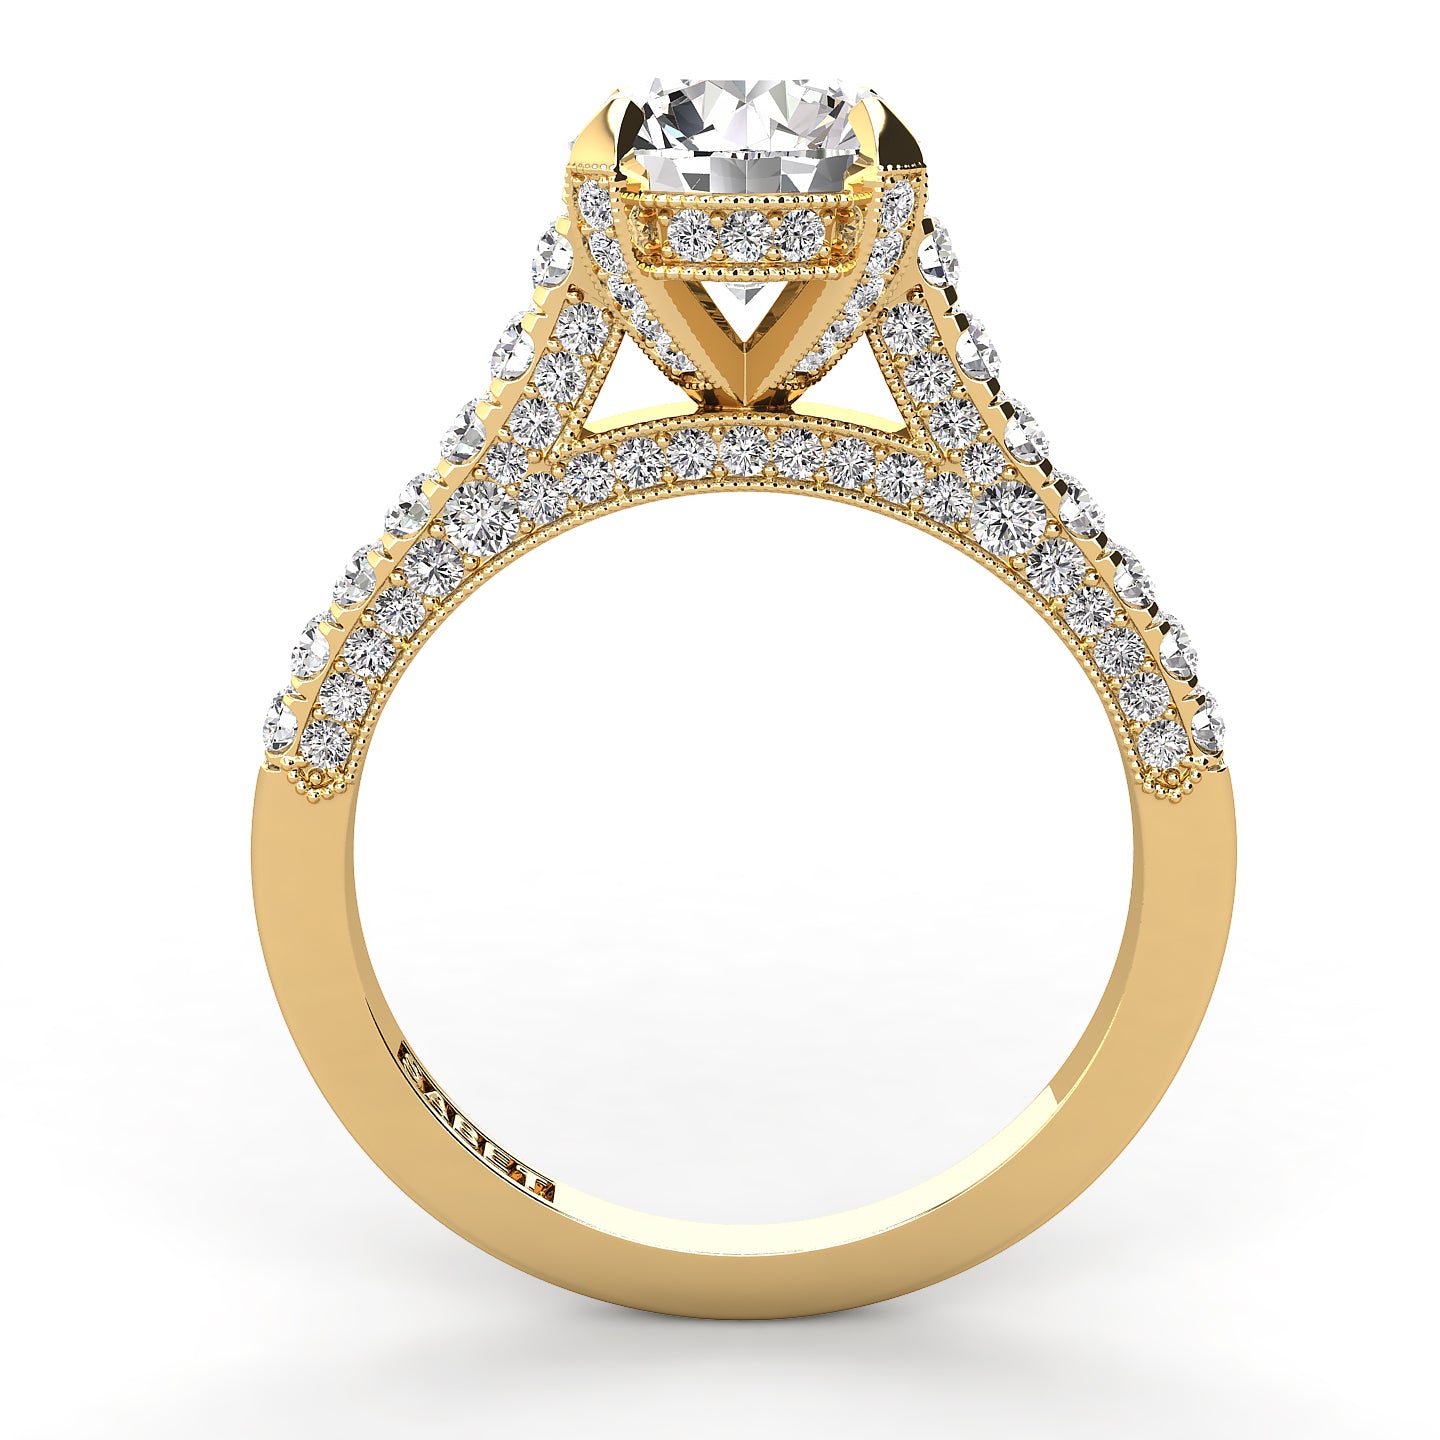 Three Sided Pave Round Diamond Engagement Ring 0.65ct